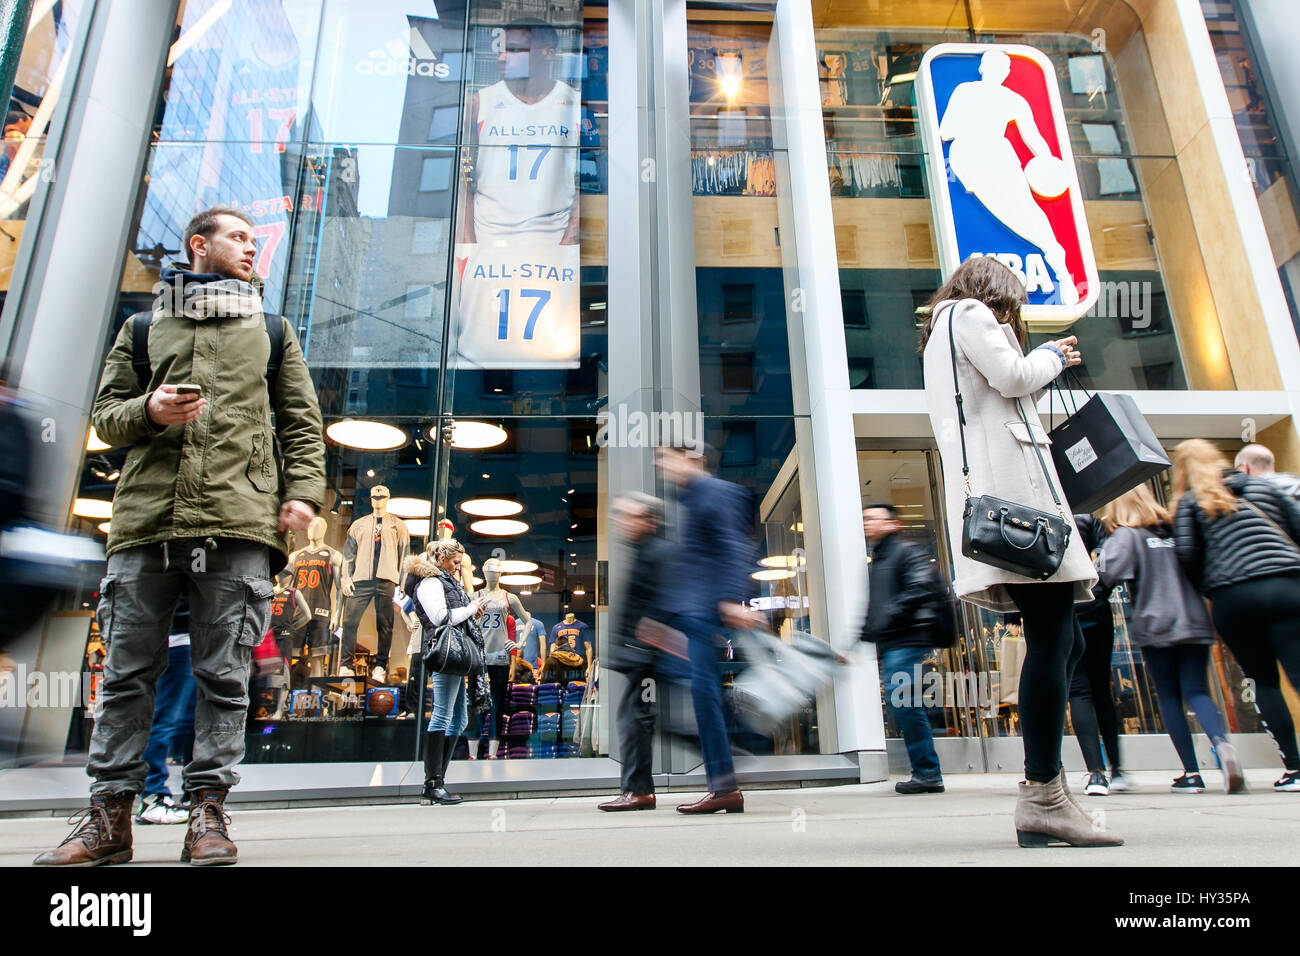 NBA Store Interior, Fifth Avenue, NYC Stock Photo - Alamy